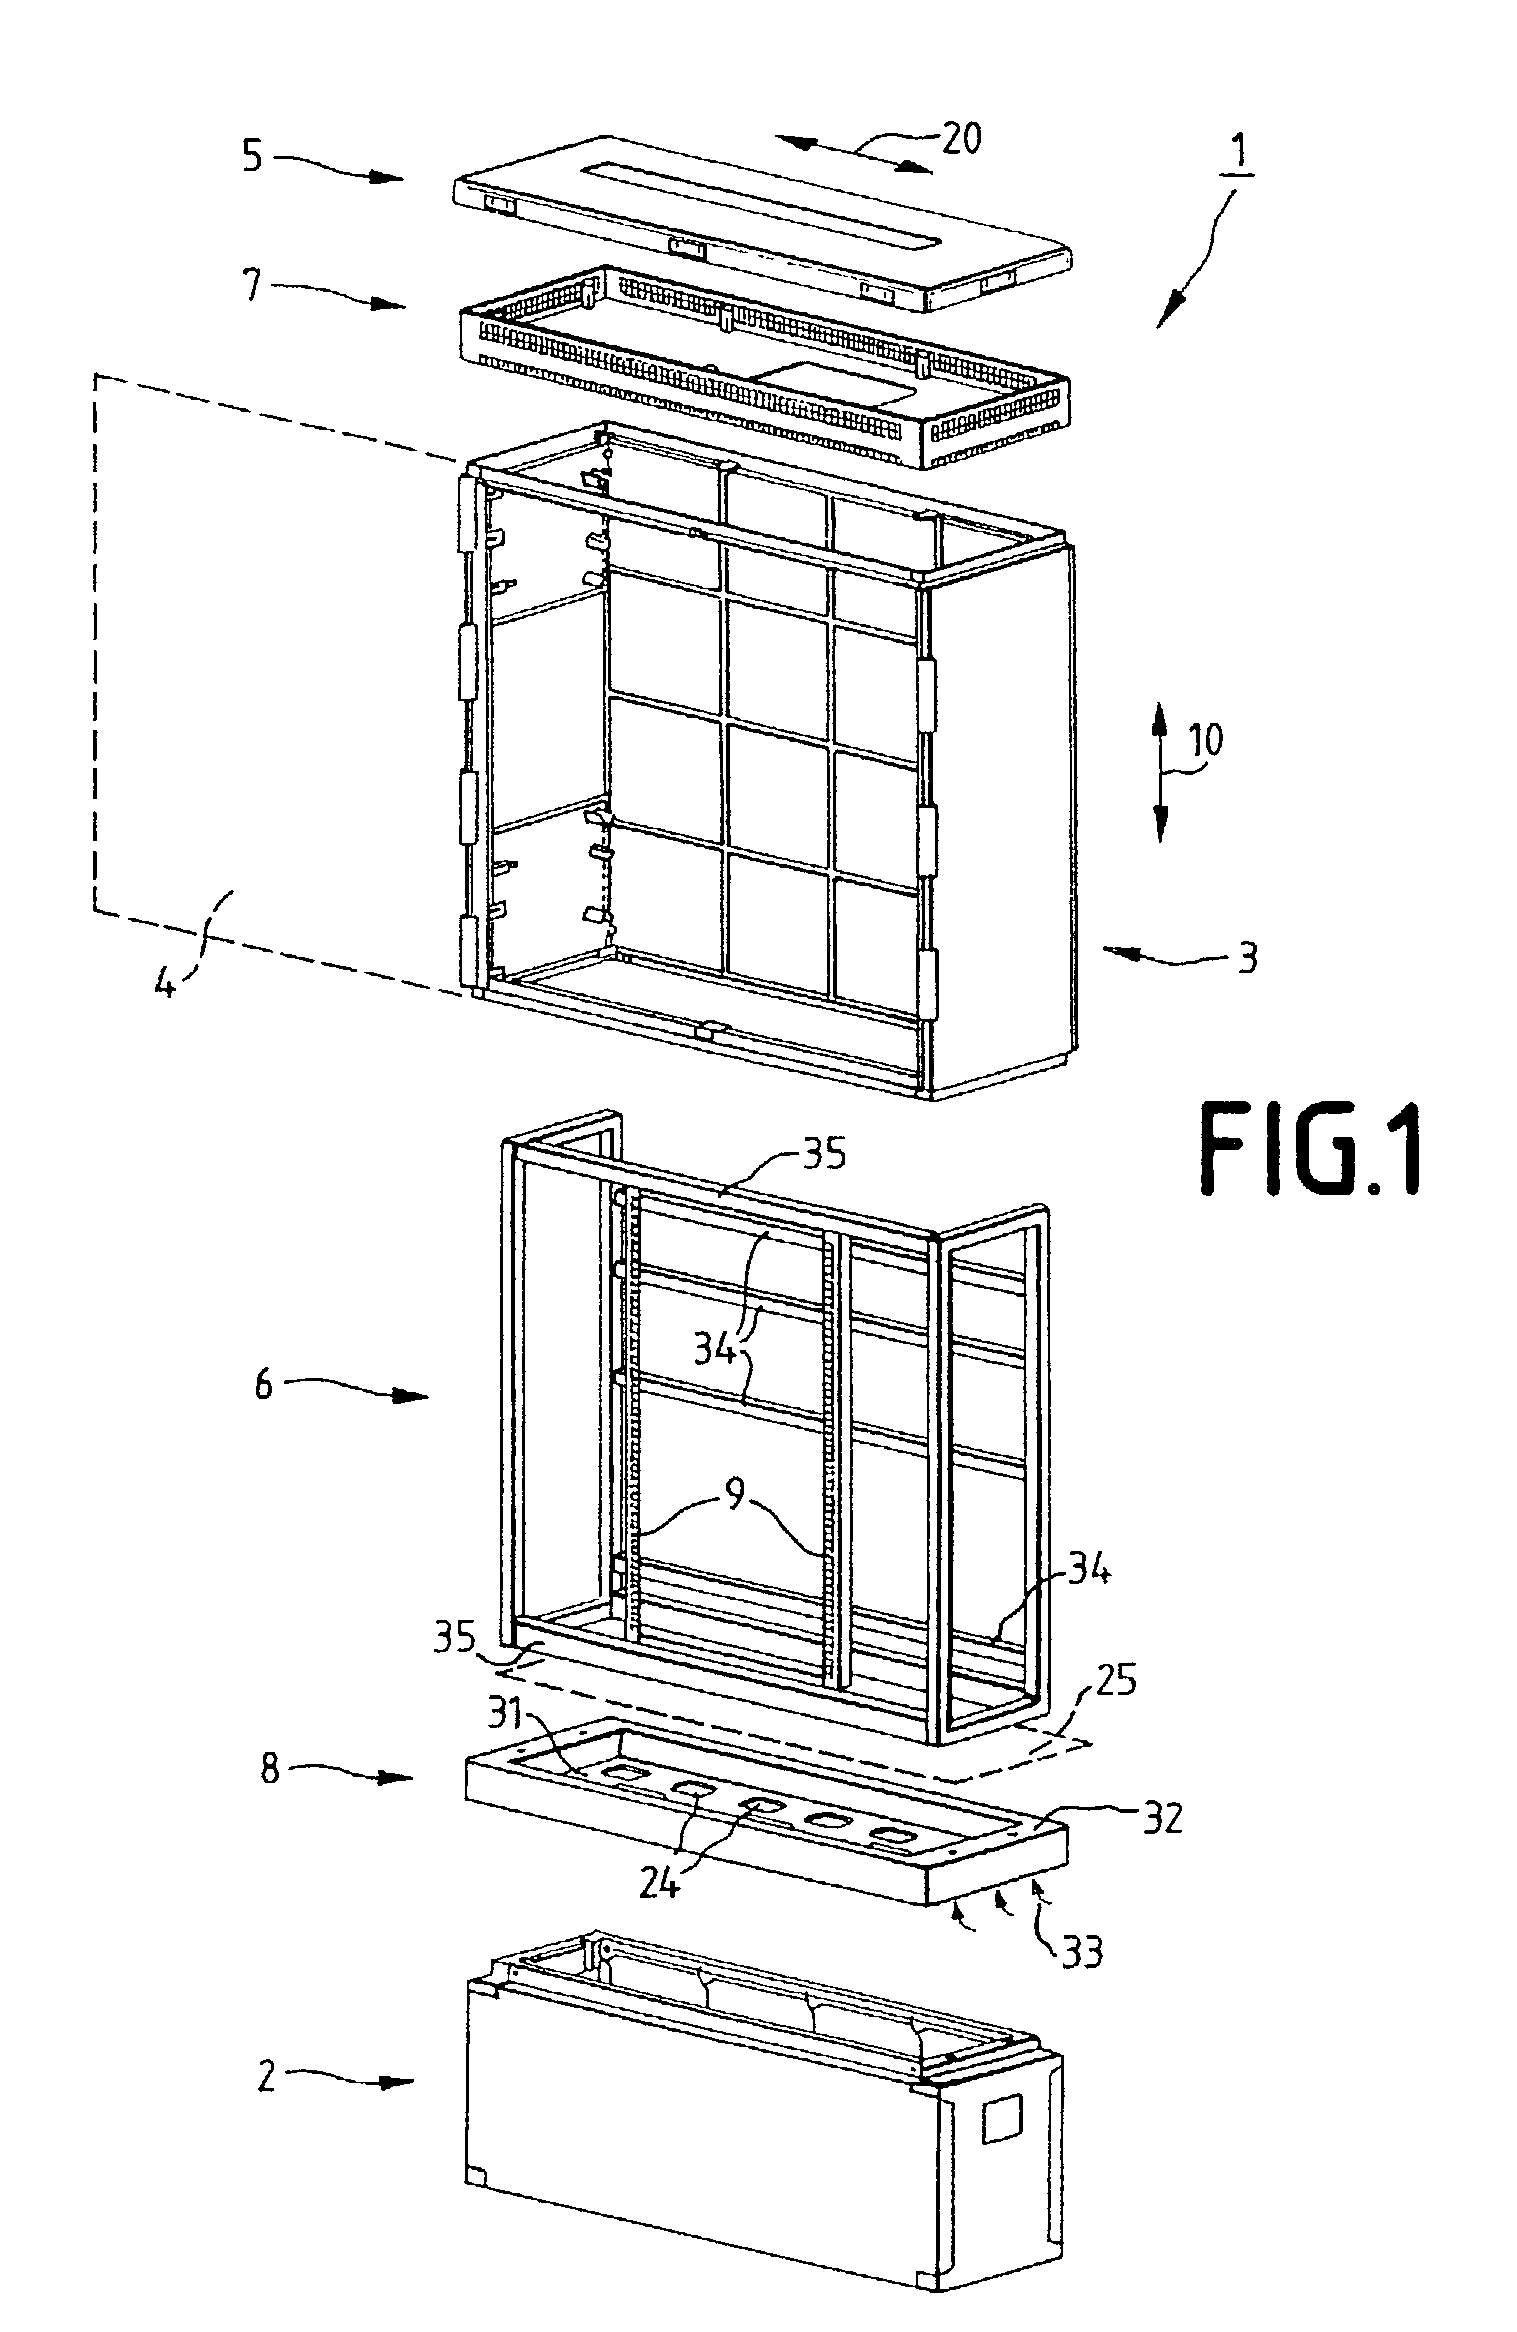 Distribution cabinet